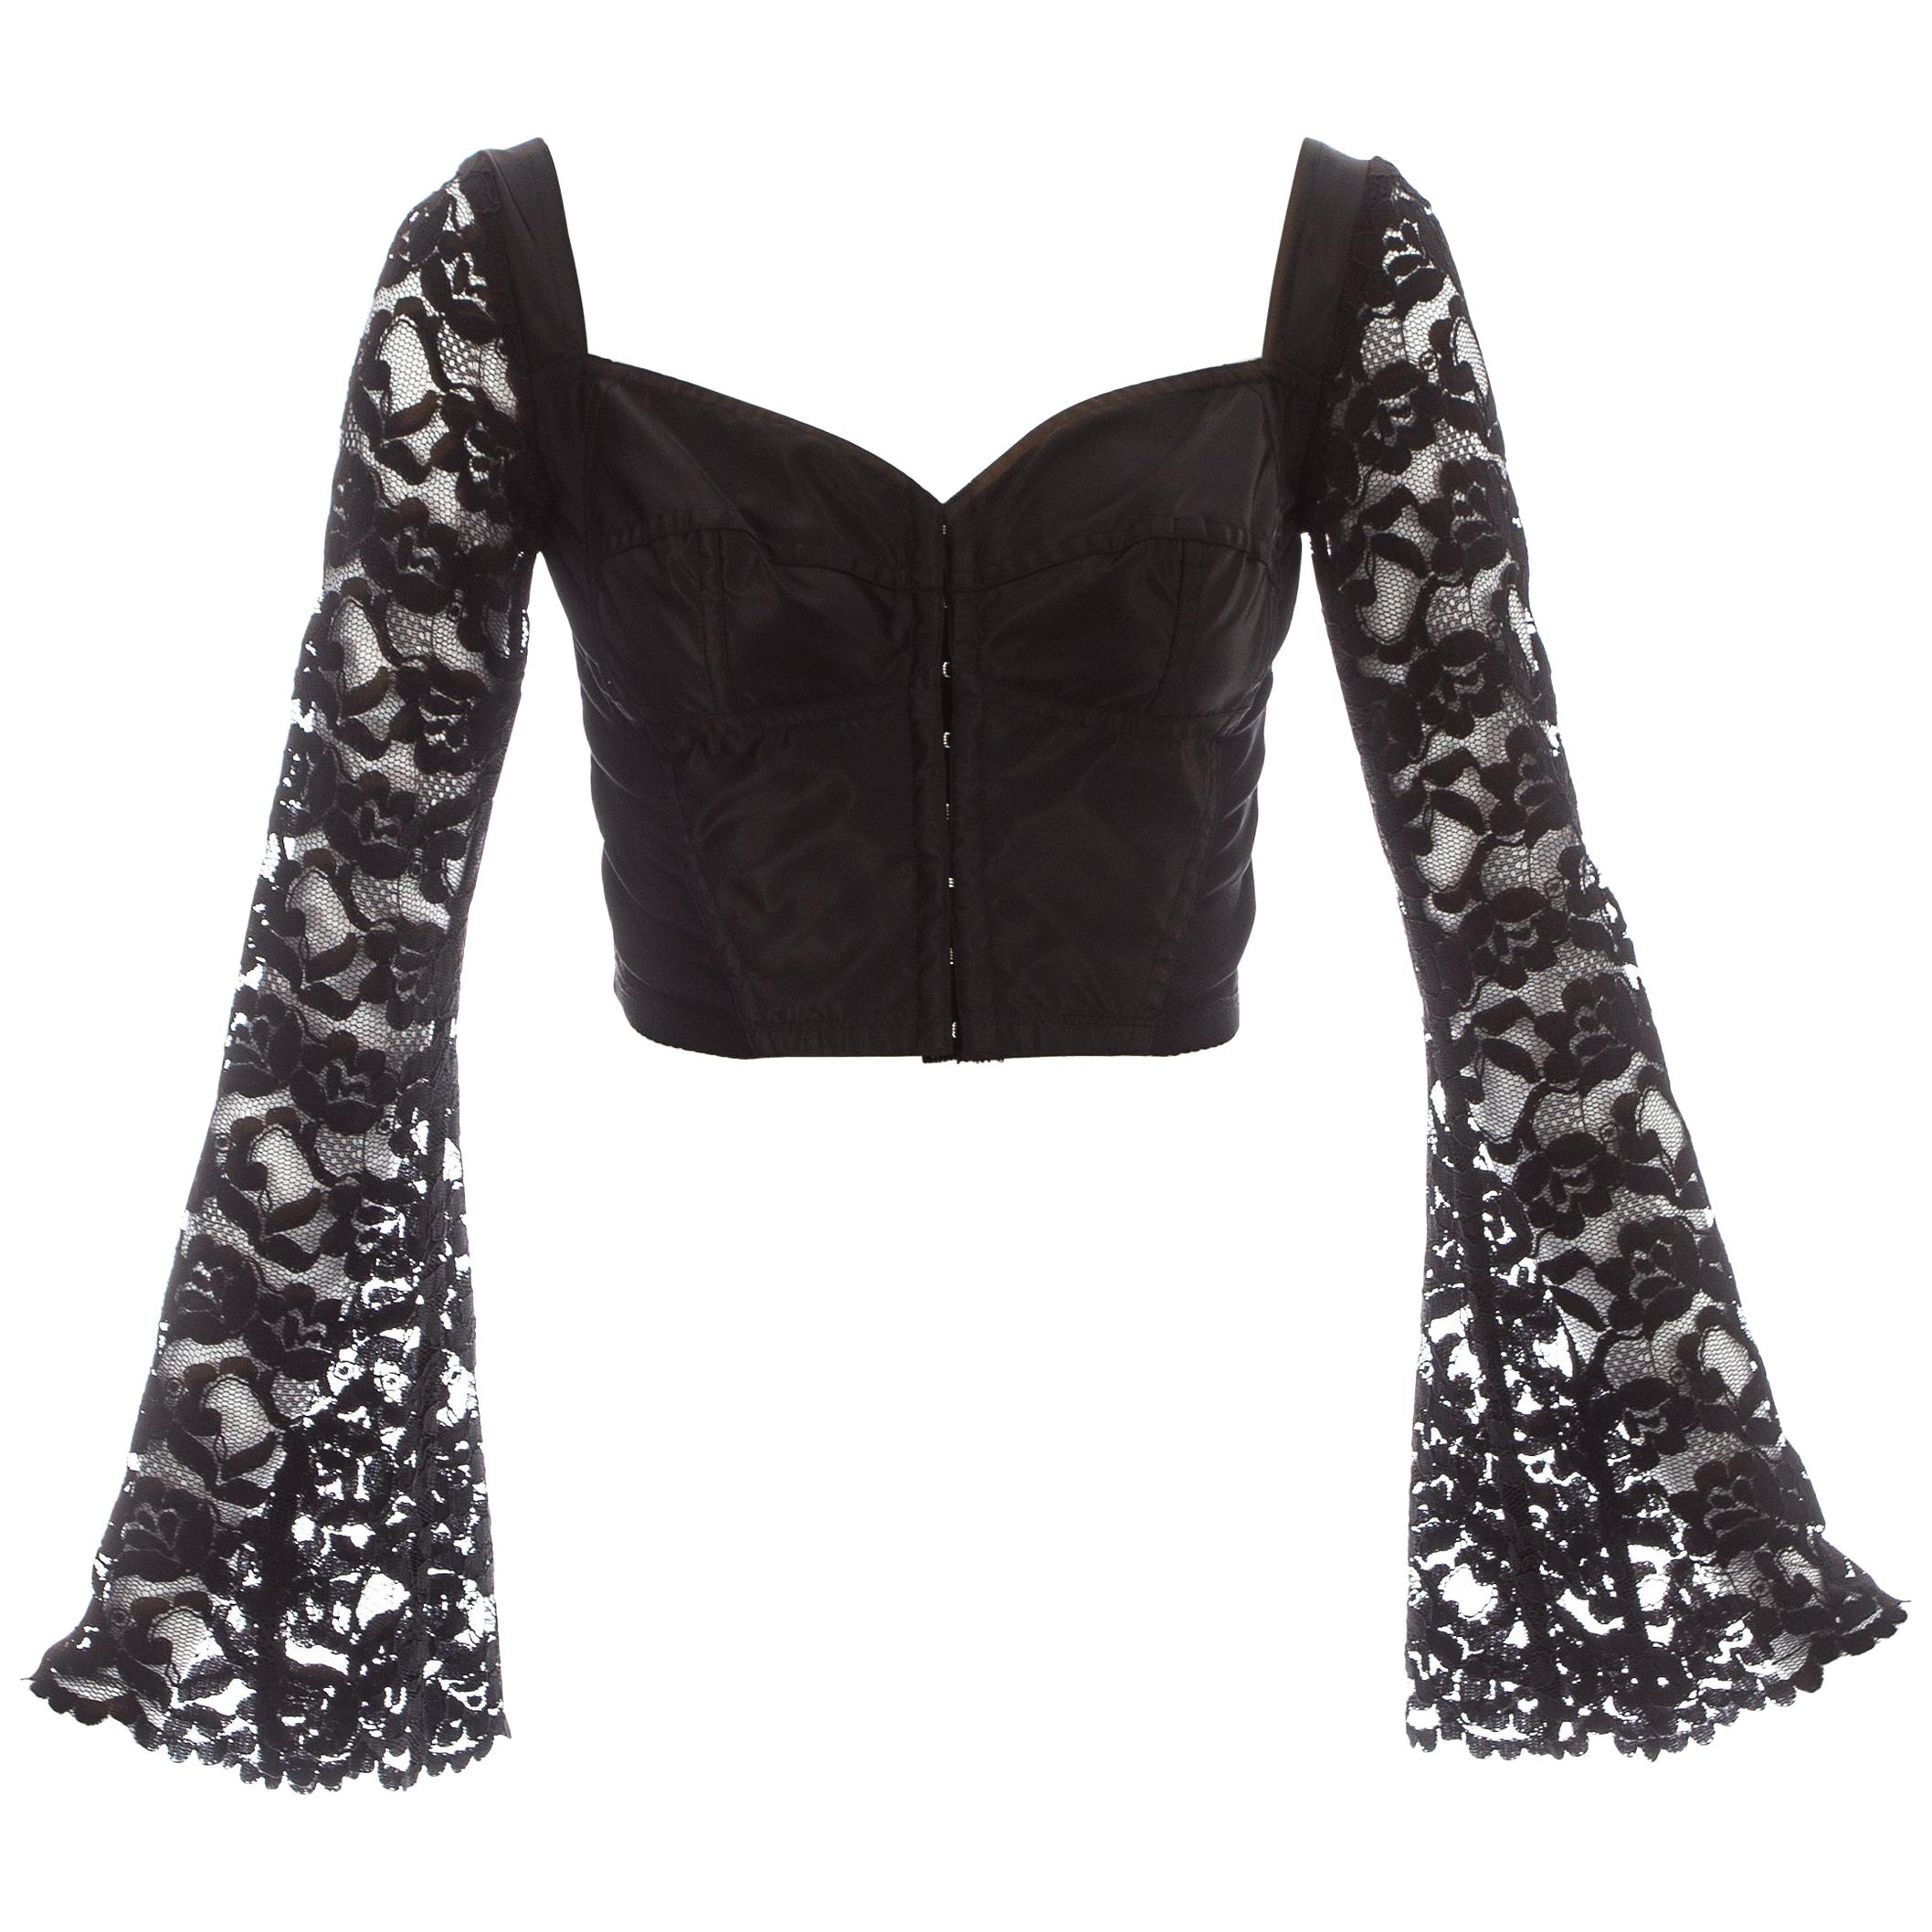 Dolce & Gabbana black lace and satin corset blouse, c. 1993 